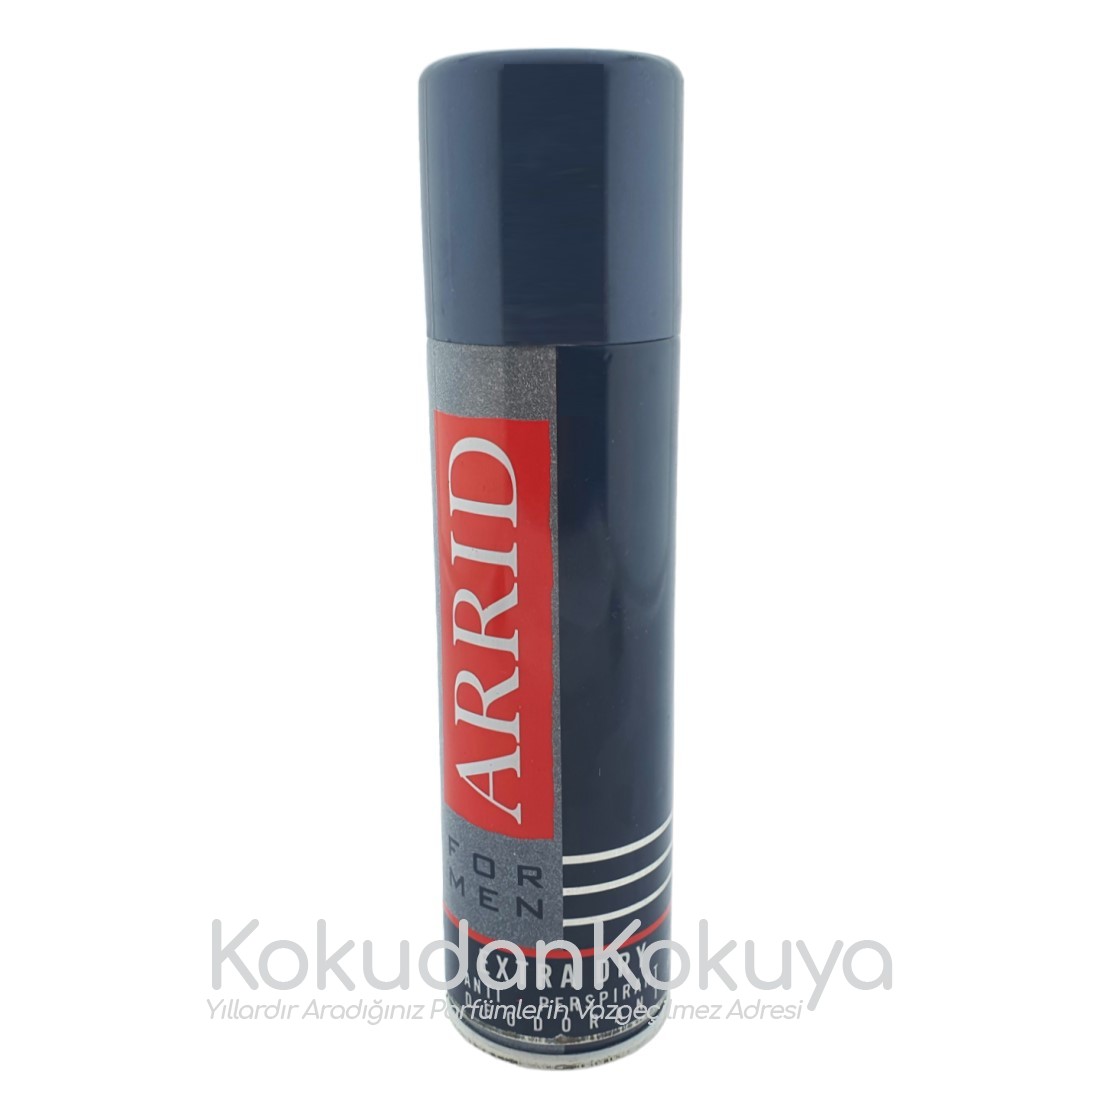 ARRID for Men (Black) Deodorant Erkek 150ml Deodorant Spray (Metal) Sprey 